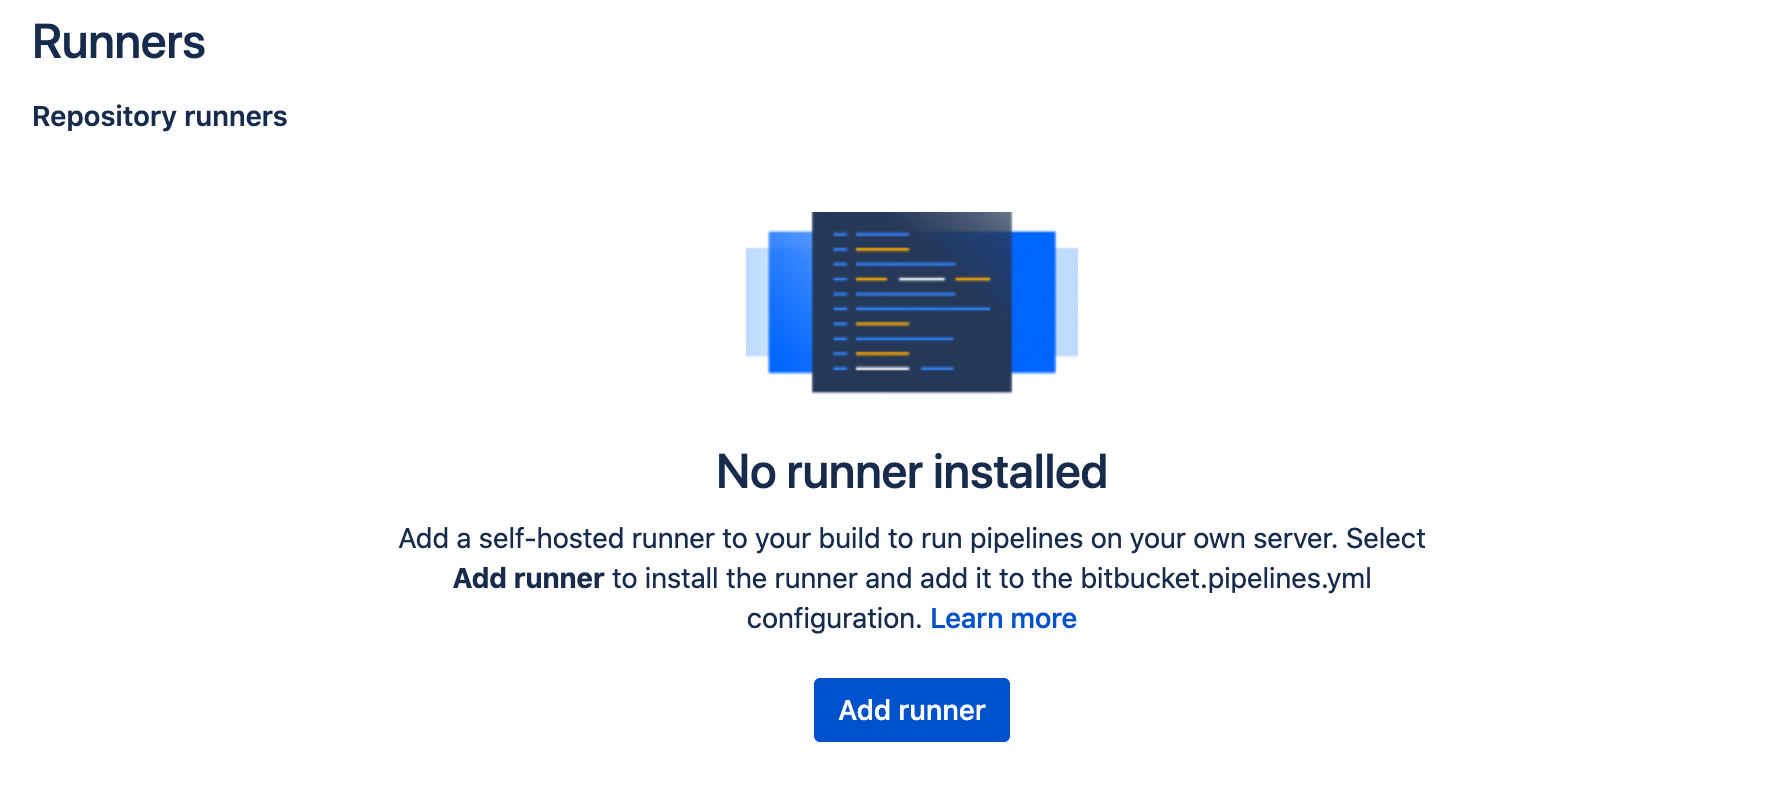 Add runner empty state user interface